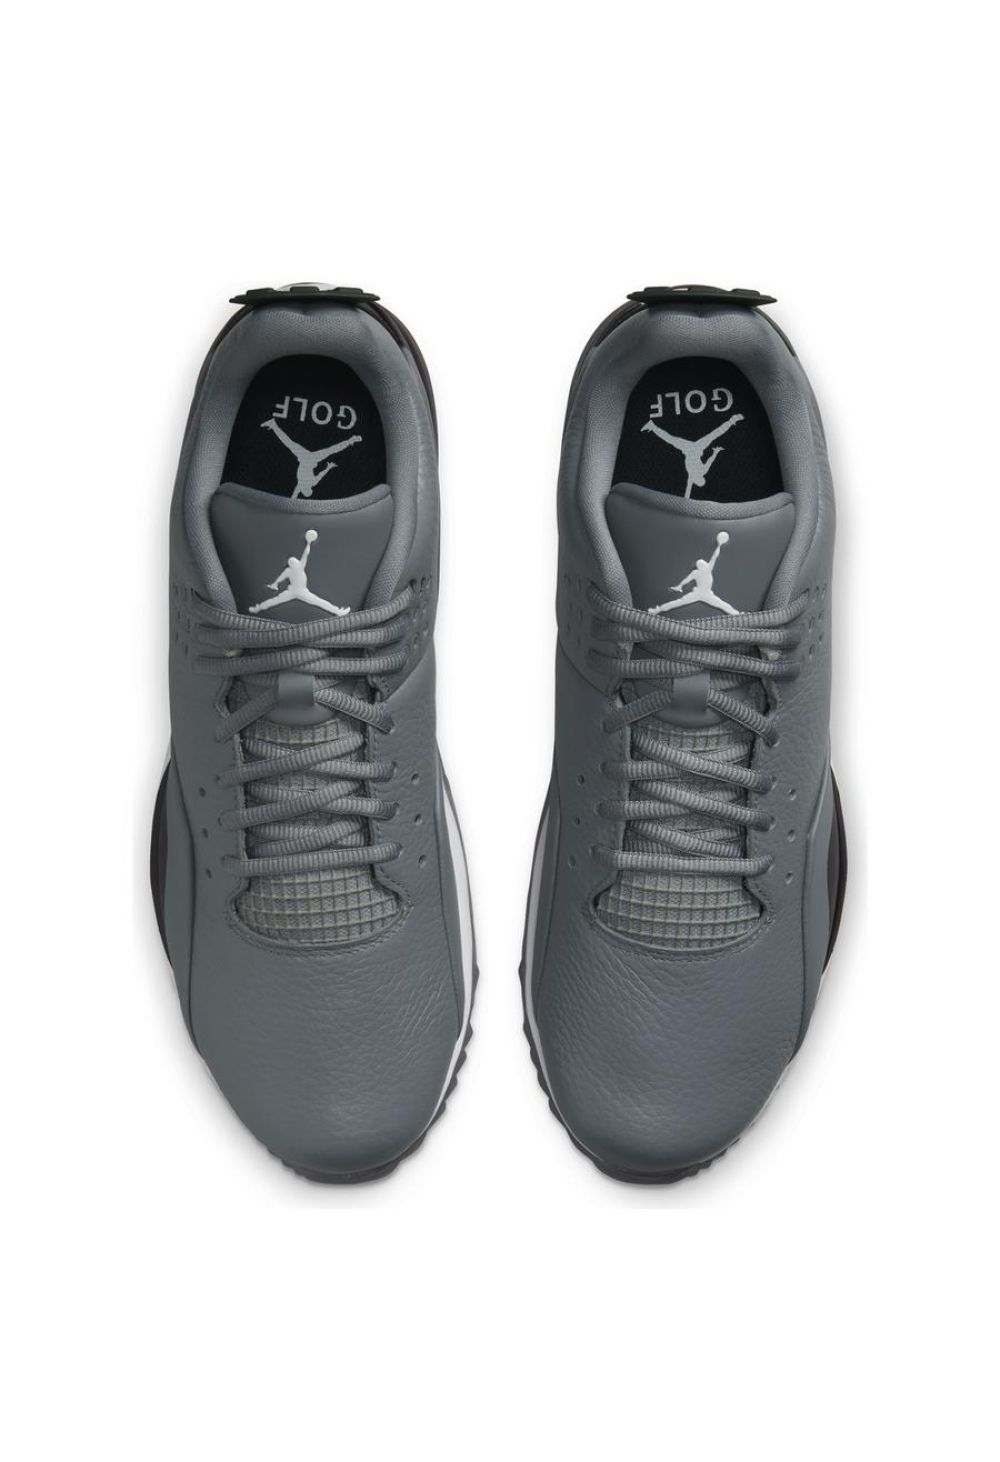 Nike Air Jordan ADG 3 Golf Shoes CW7242